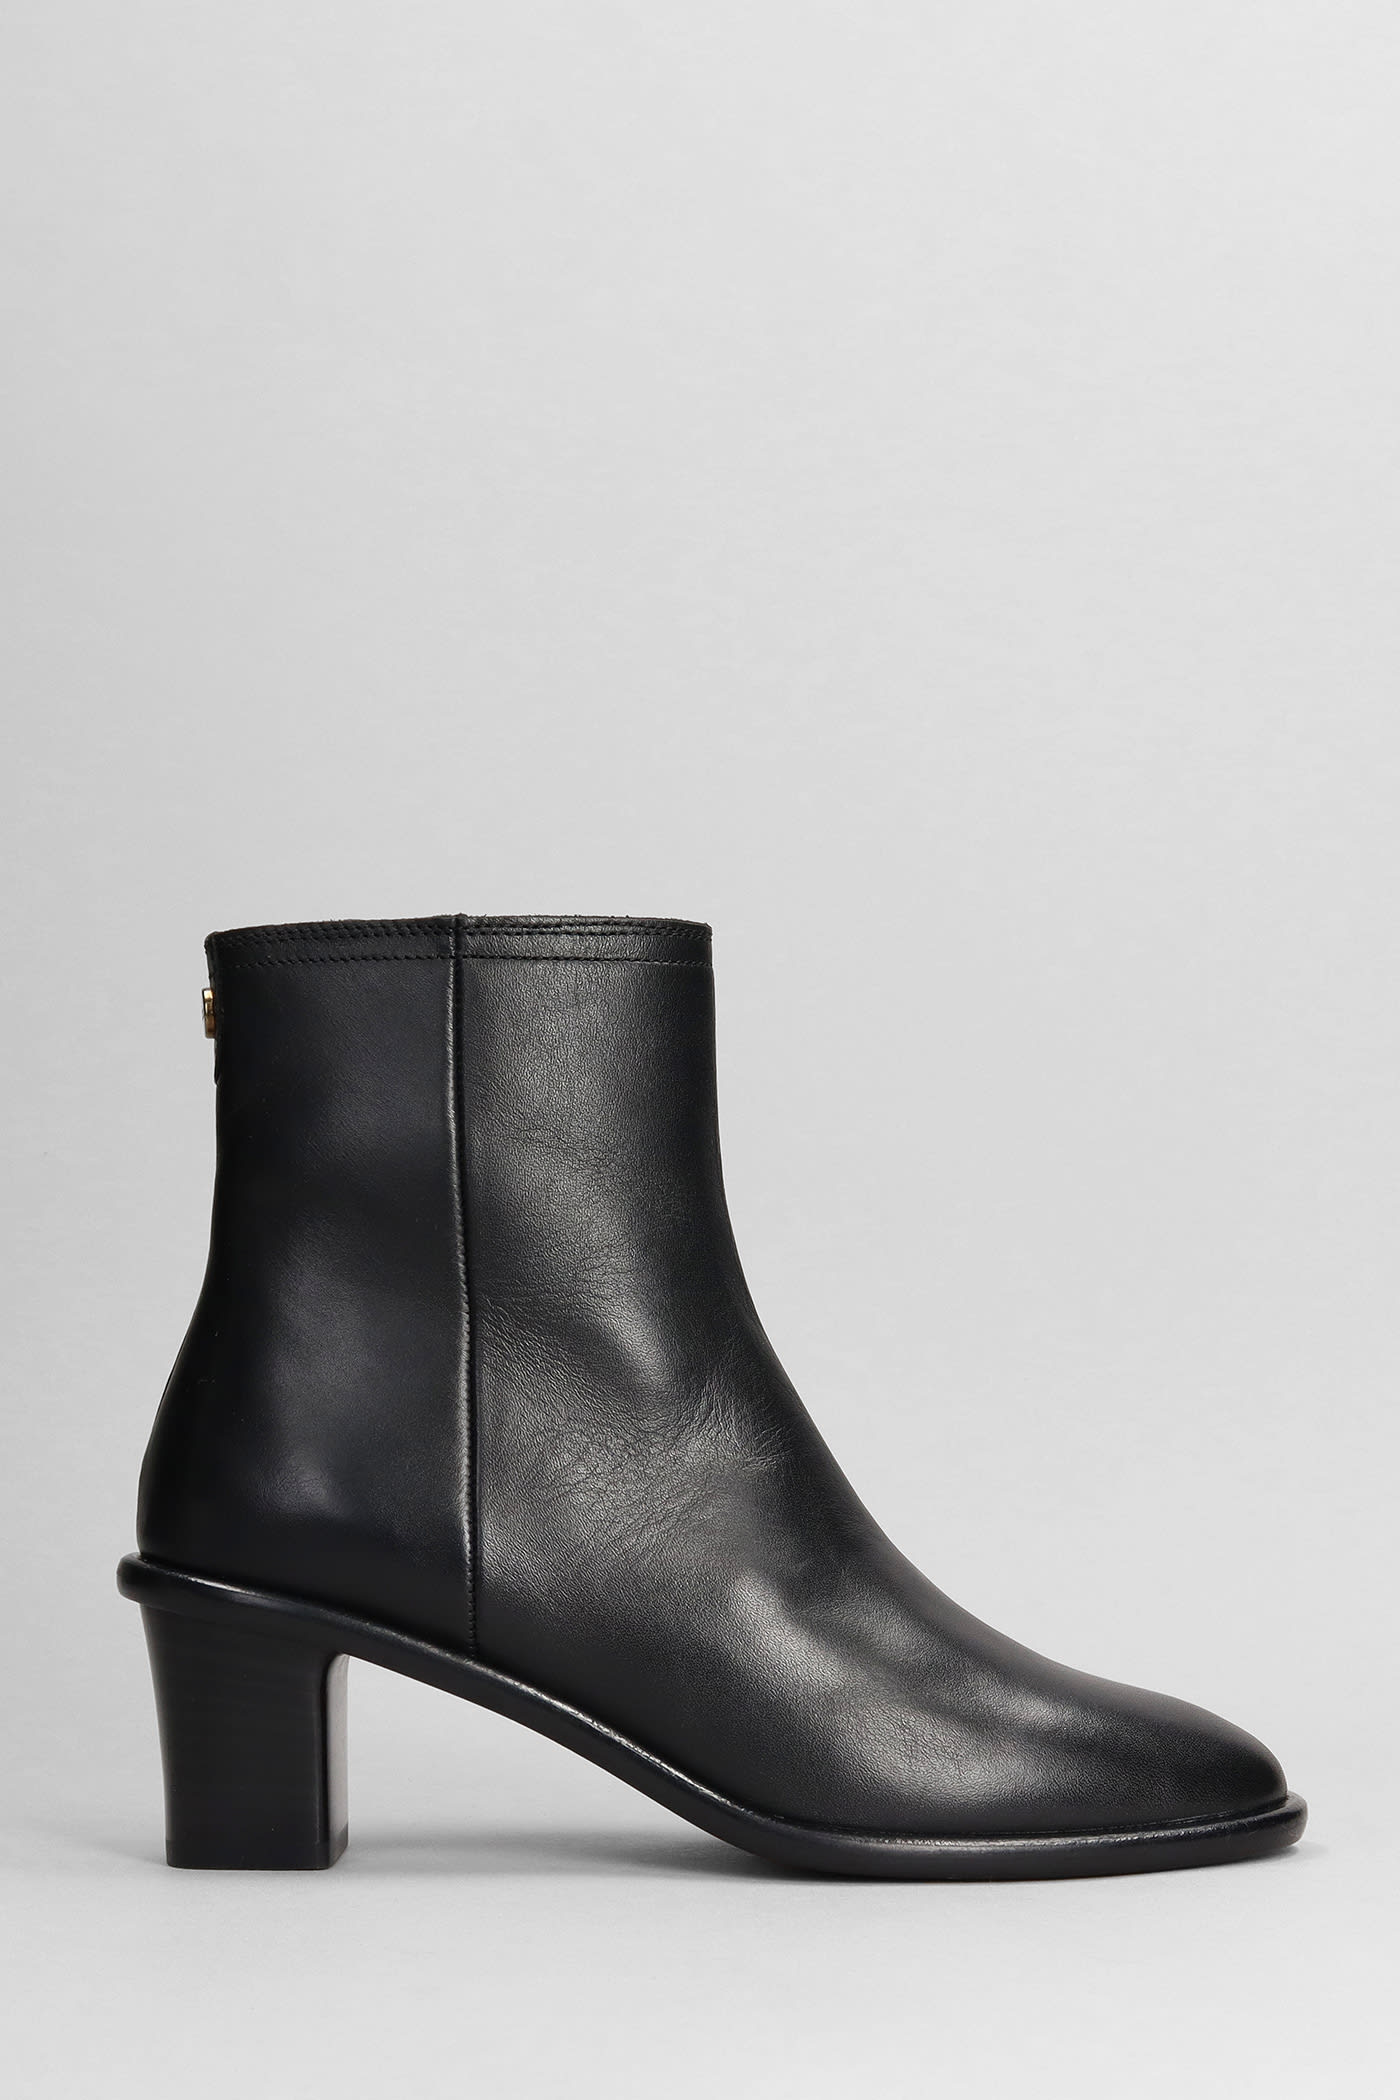 Gelda Low Heels Ankle Boots In Black Leather